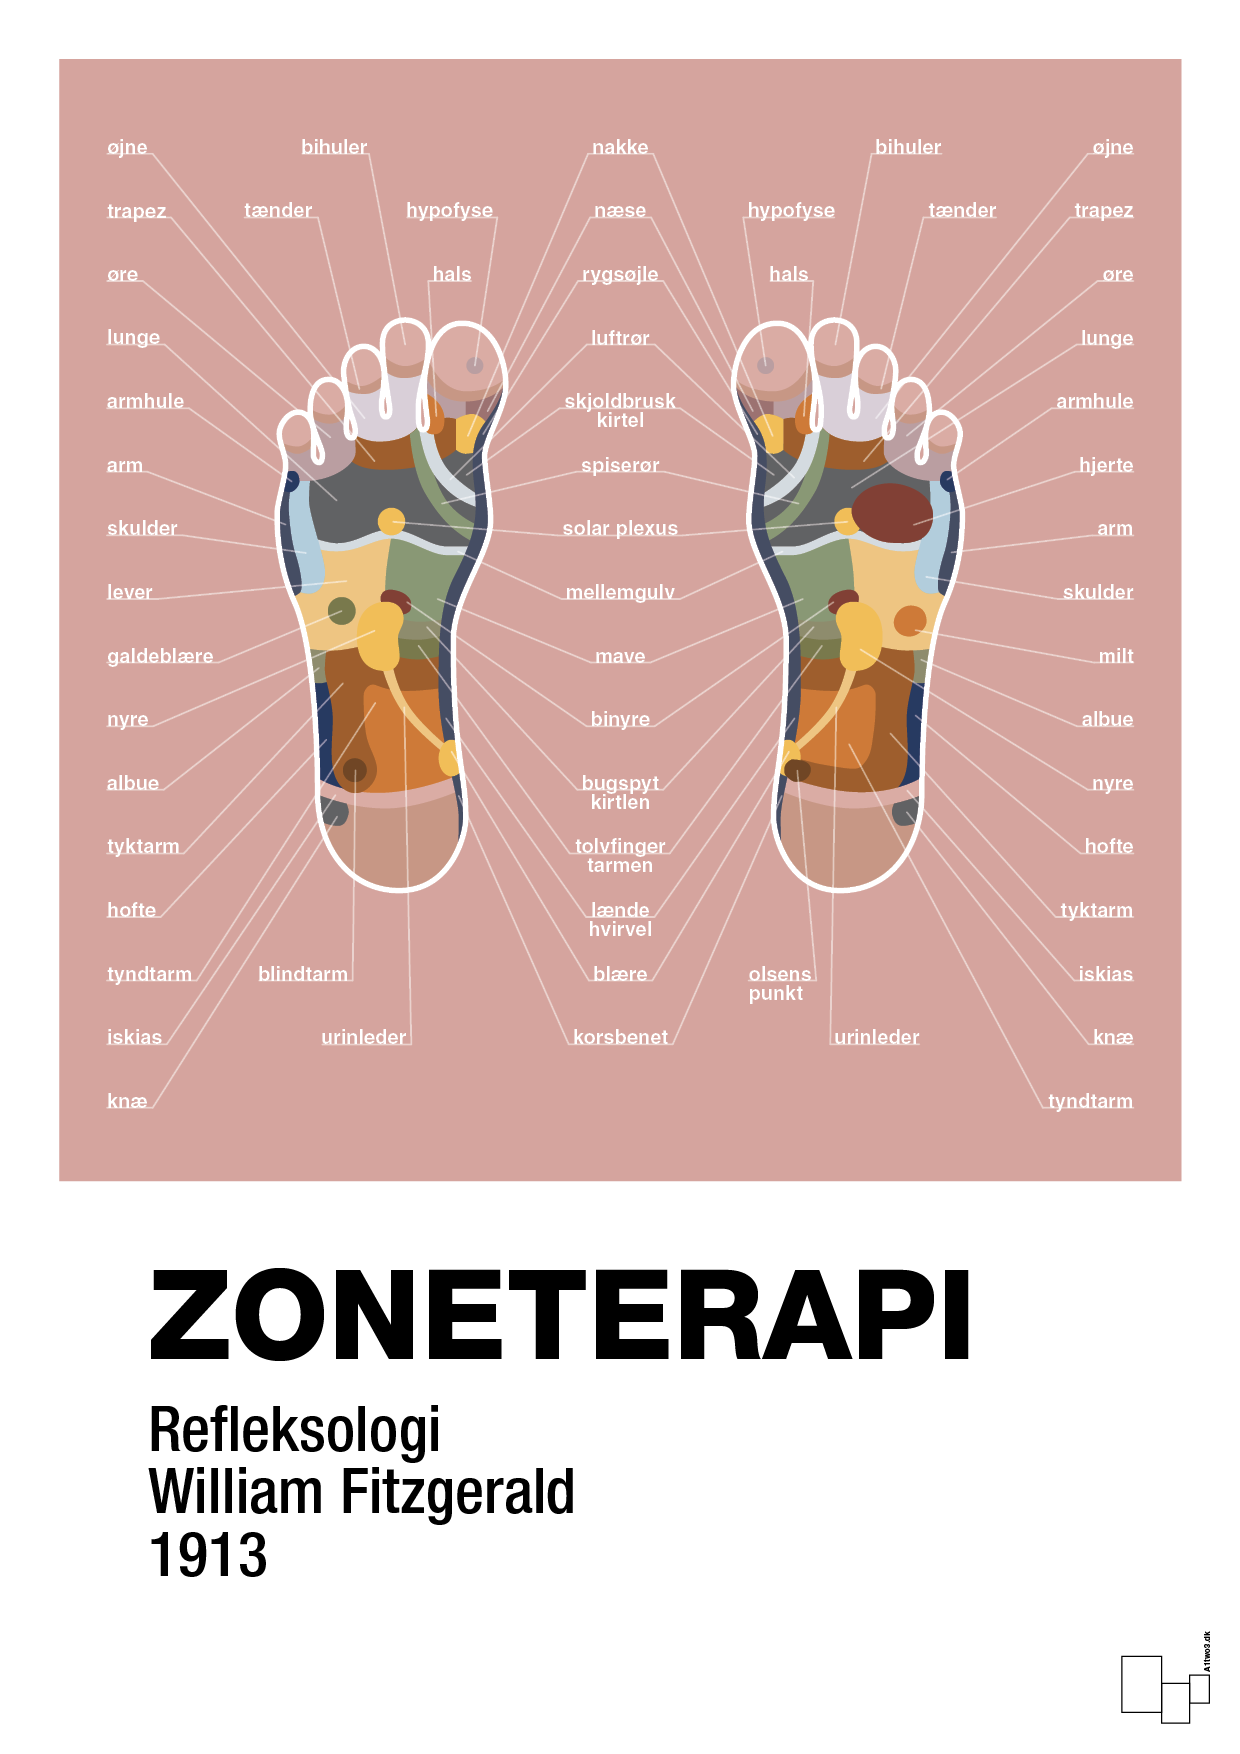 zoneterapi - Plakat med Videnskab i Bubble Shell